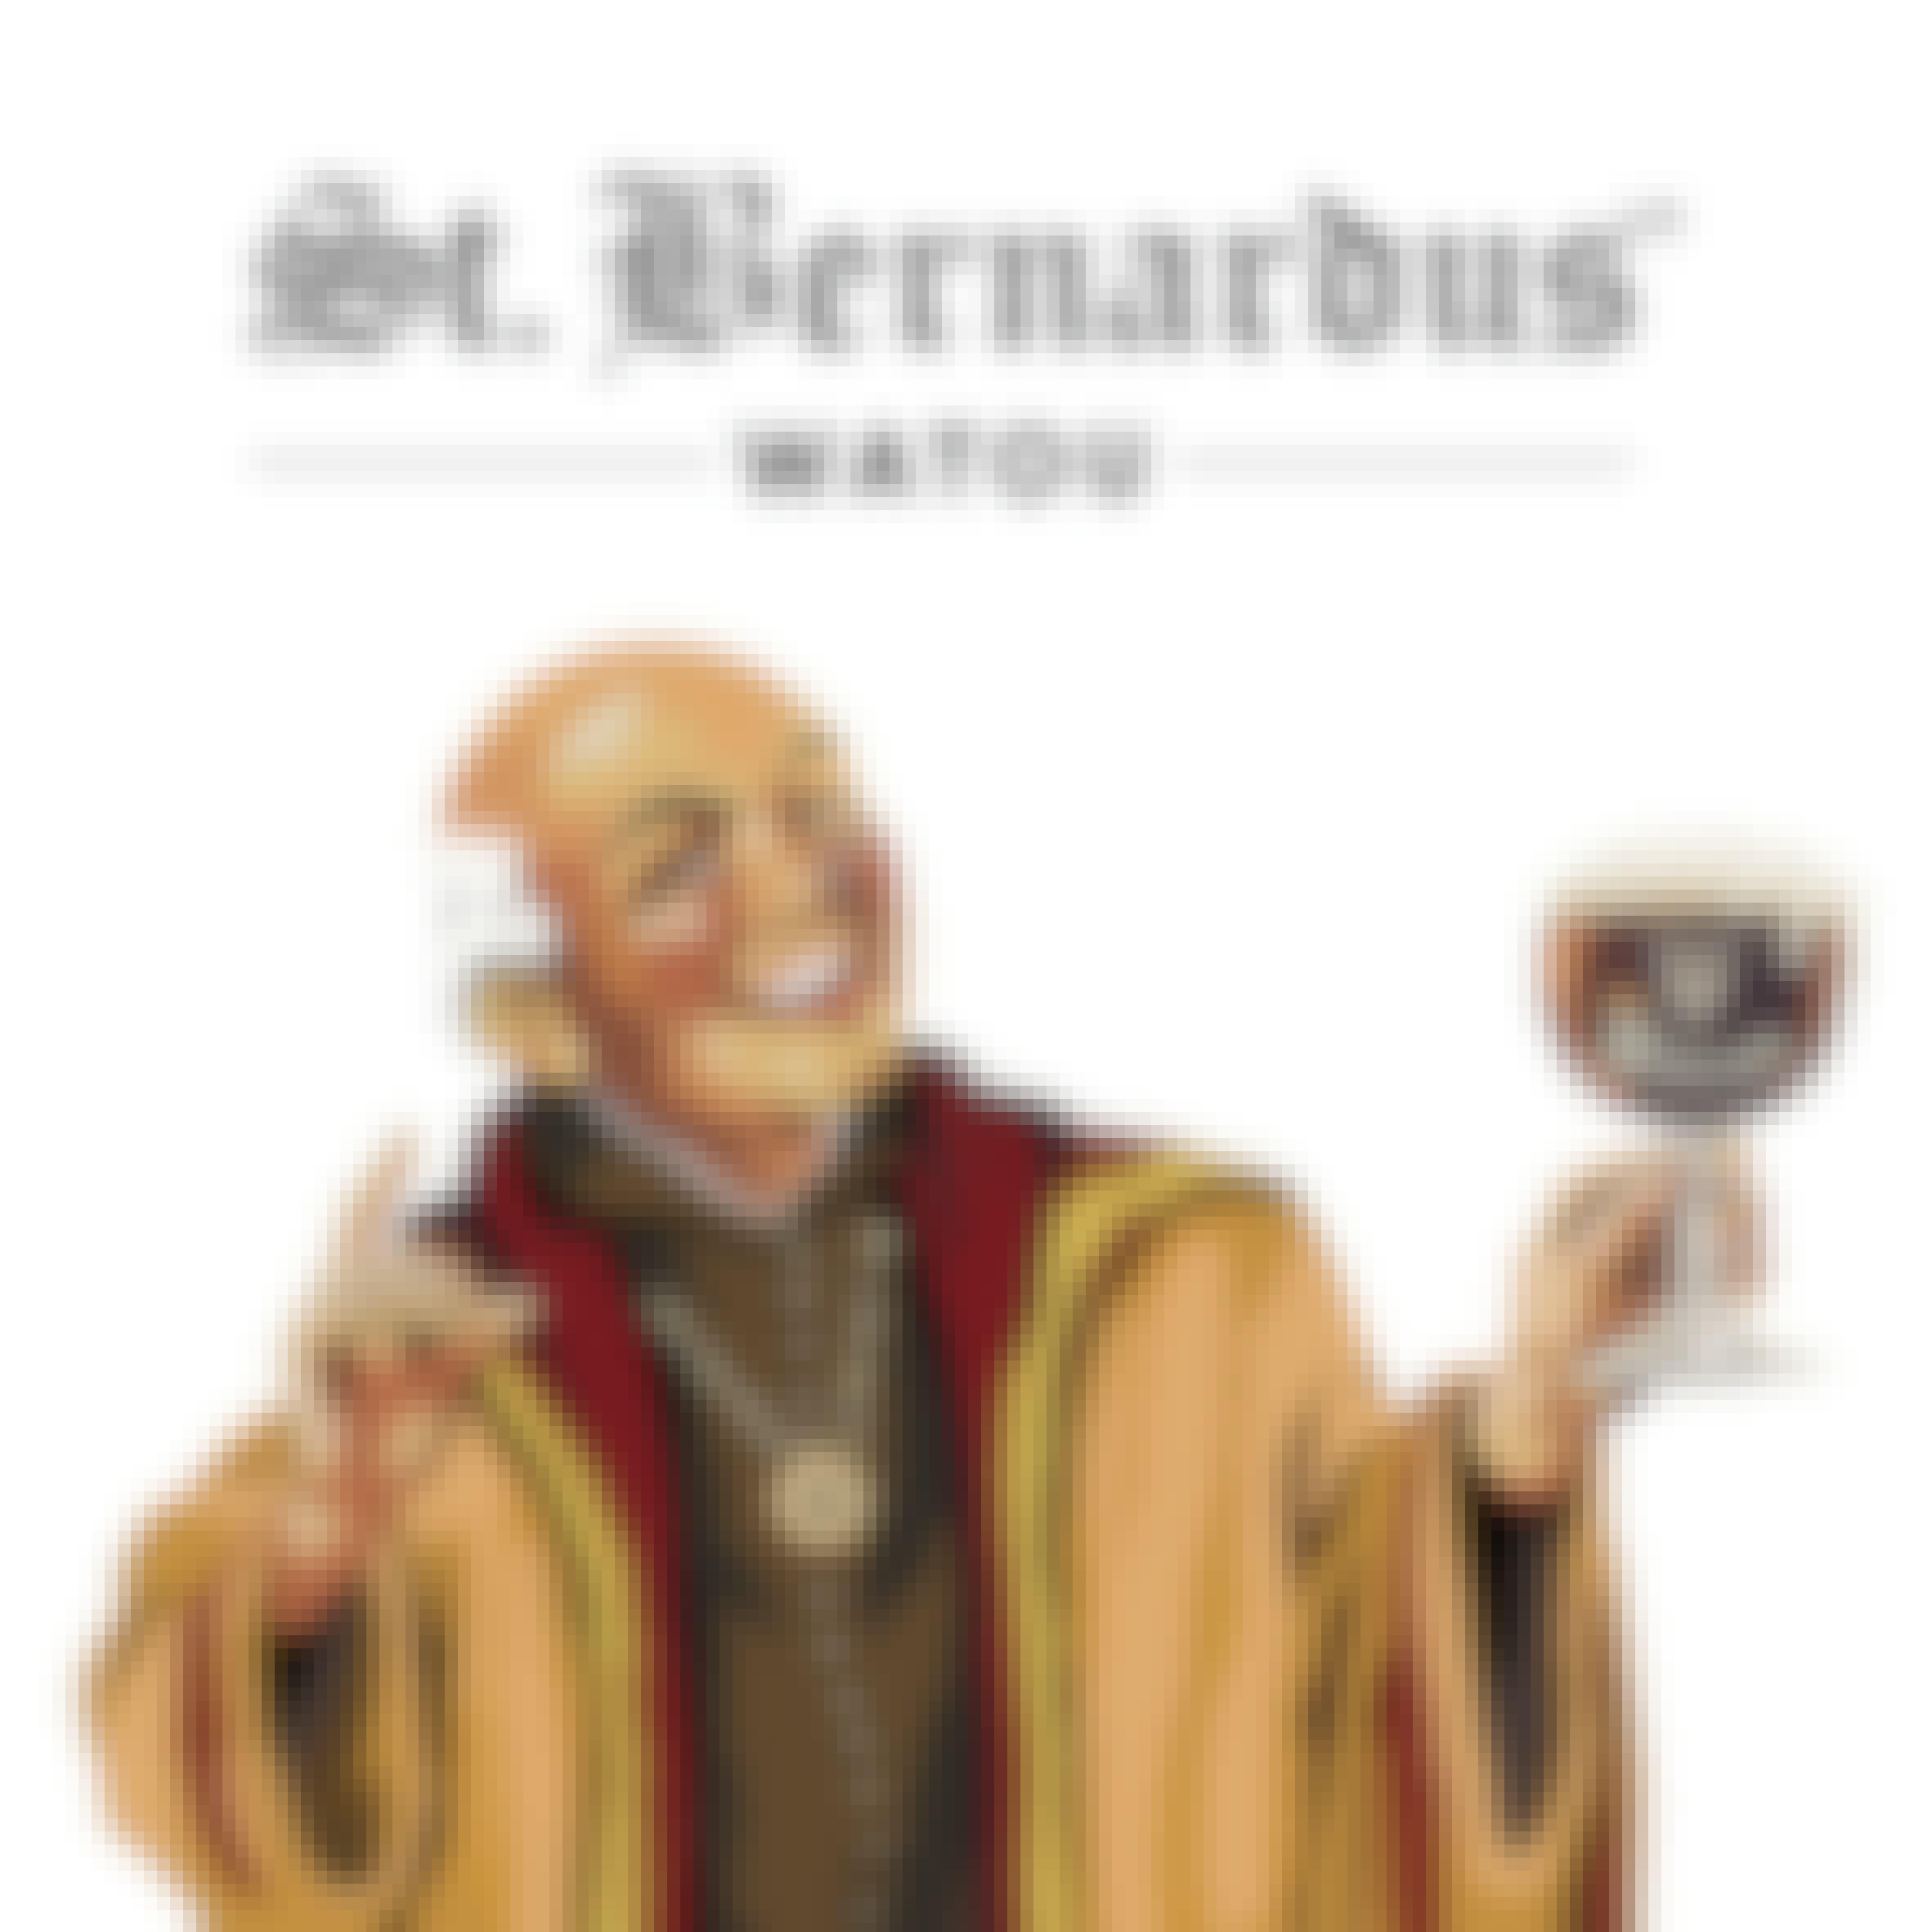 St. Bernardus Abt 12 Barrel Aged Sour 1/6 Barrel Keg